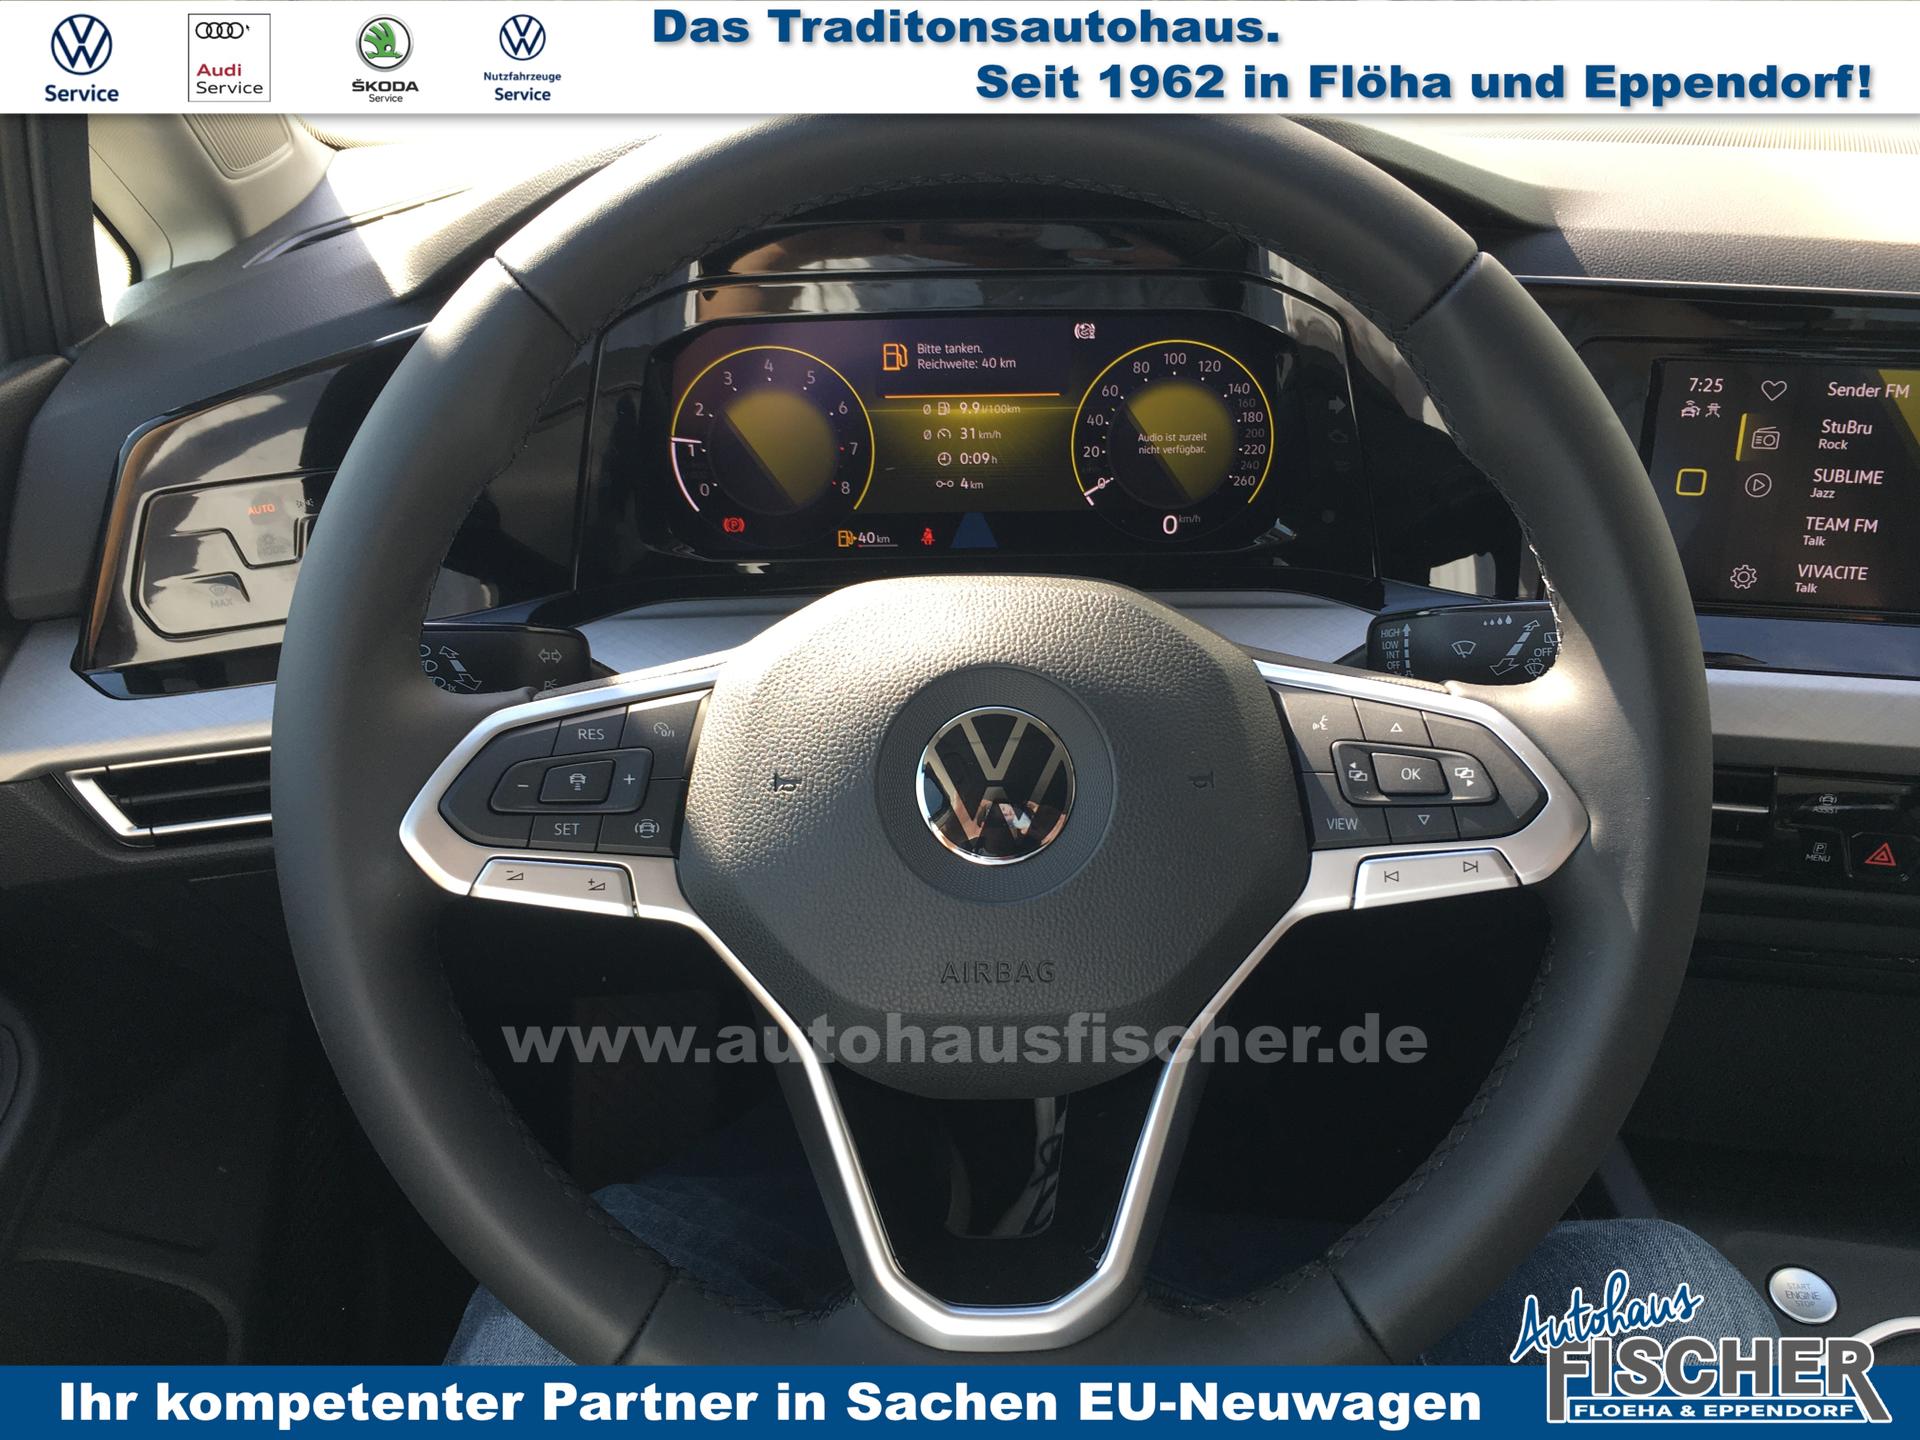 Volkswagen Golf R-Line 1.5 TSI ACT 130PS inkl. SPORTSITZE/-FAHRWERK  KLIMAAUTOMATIK READY2DISCOVER/BT/2x USB/APP-CONNECT WIRELESS  LED-SCHEINW./-RÜCKL. AMBIENTEBEL. DIG. COCKPIT PRO PS VO/HI INDUKT.  LADESTATION STARTKNOPF SPORT-MULTIF.-LEDERLENKRAD 17